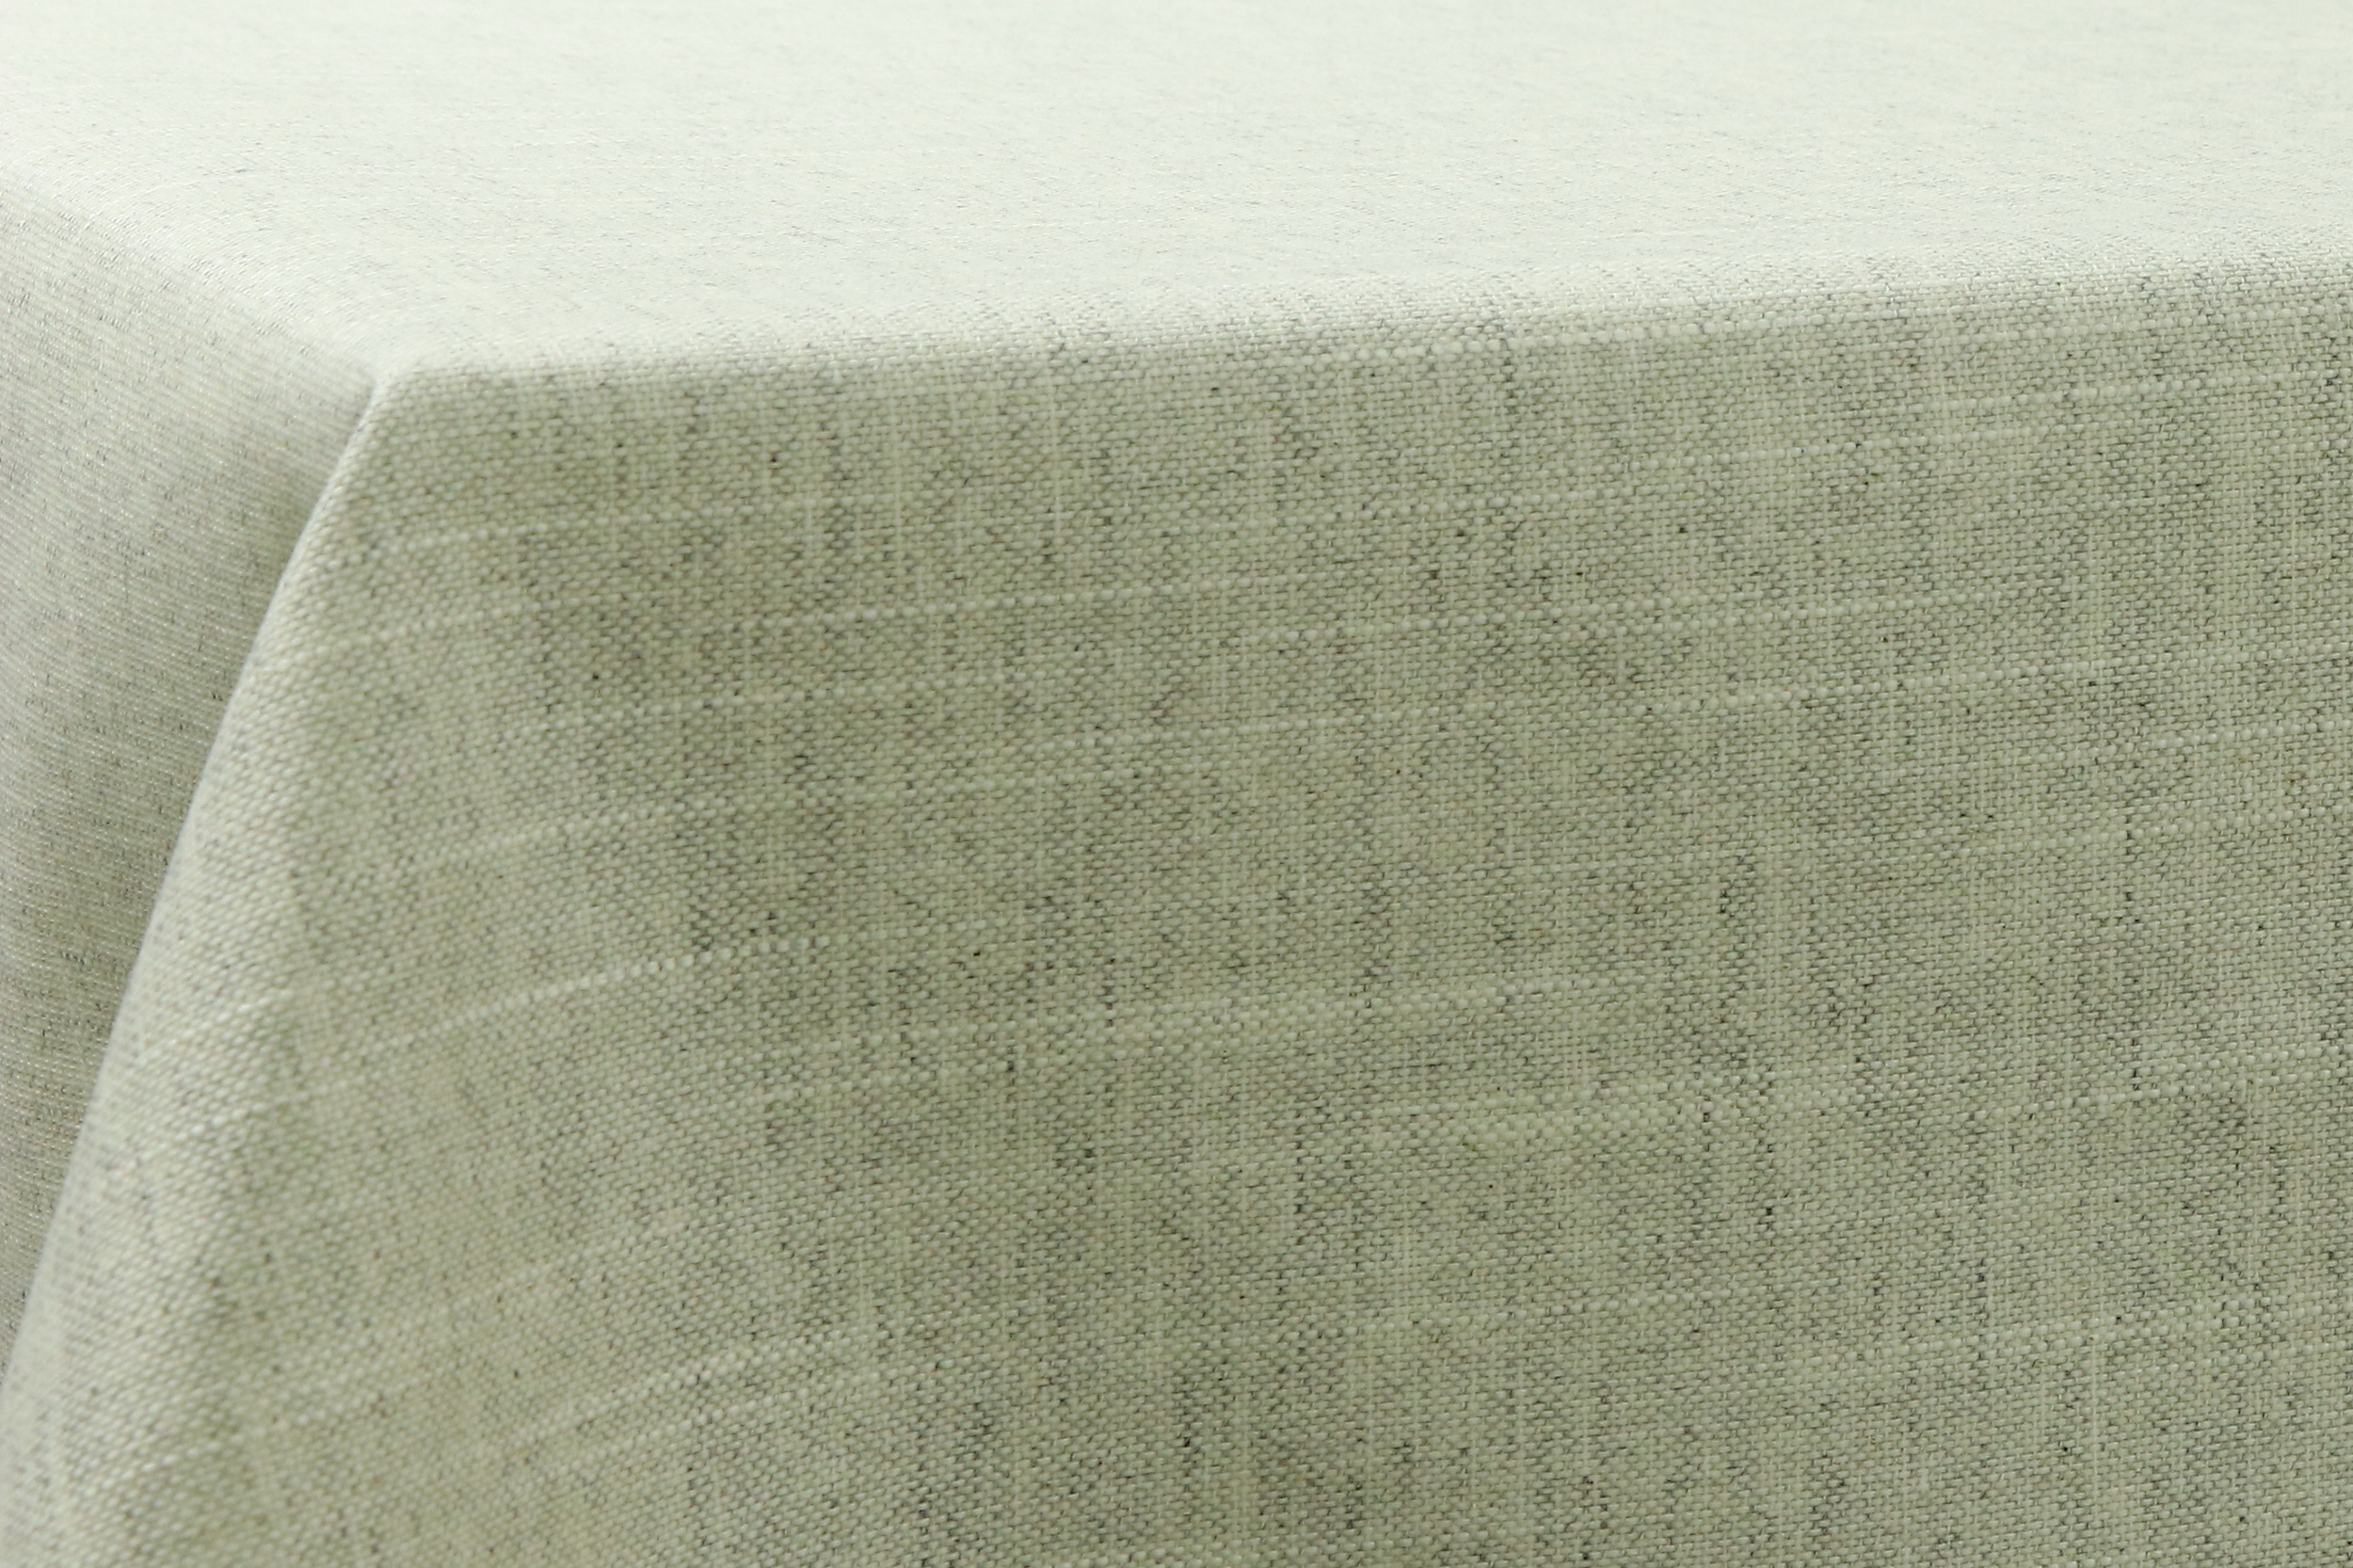 Tischdecke abwaschbar Seidengrau einfarbig Perla ab 80x80 cm - 138x138 cm QUADRATISCH